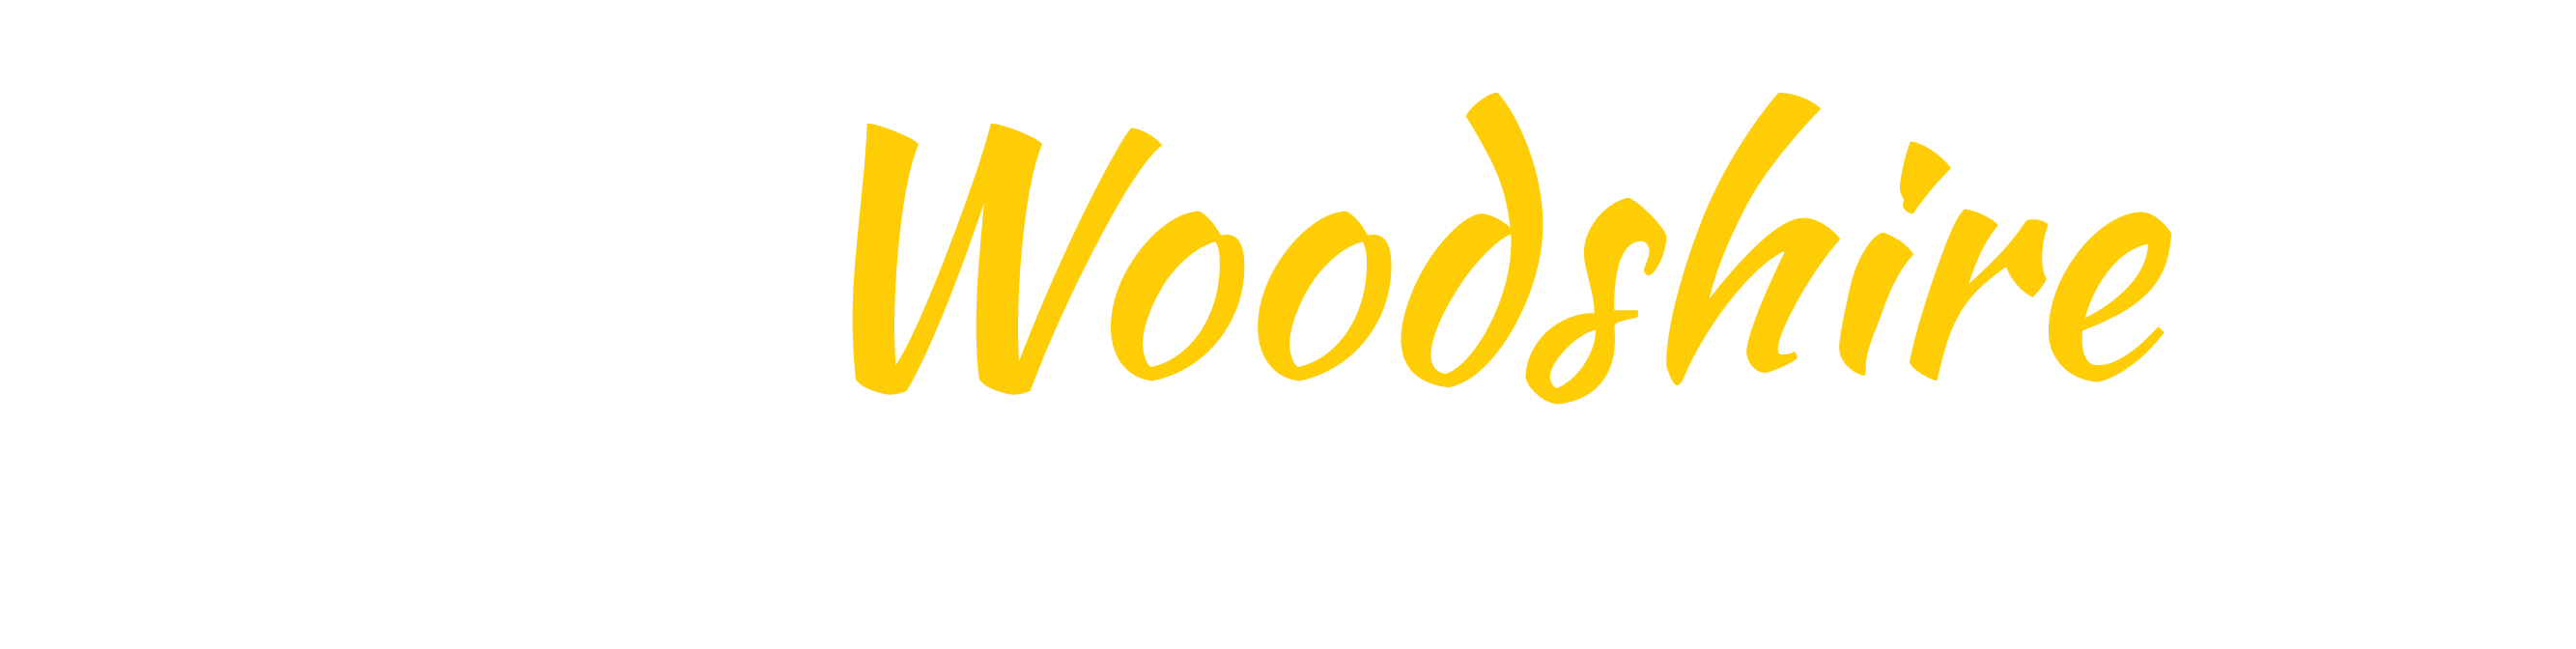 Woodshire-logo-3---Trykker---yellow-font